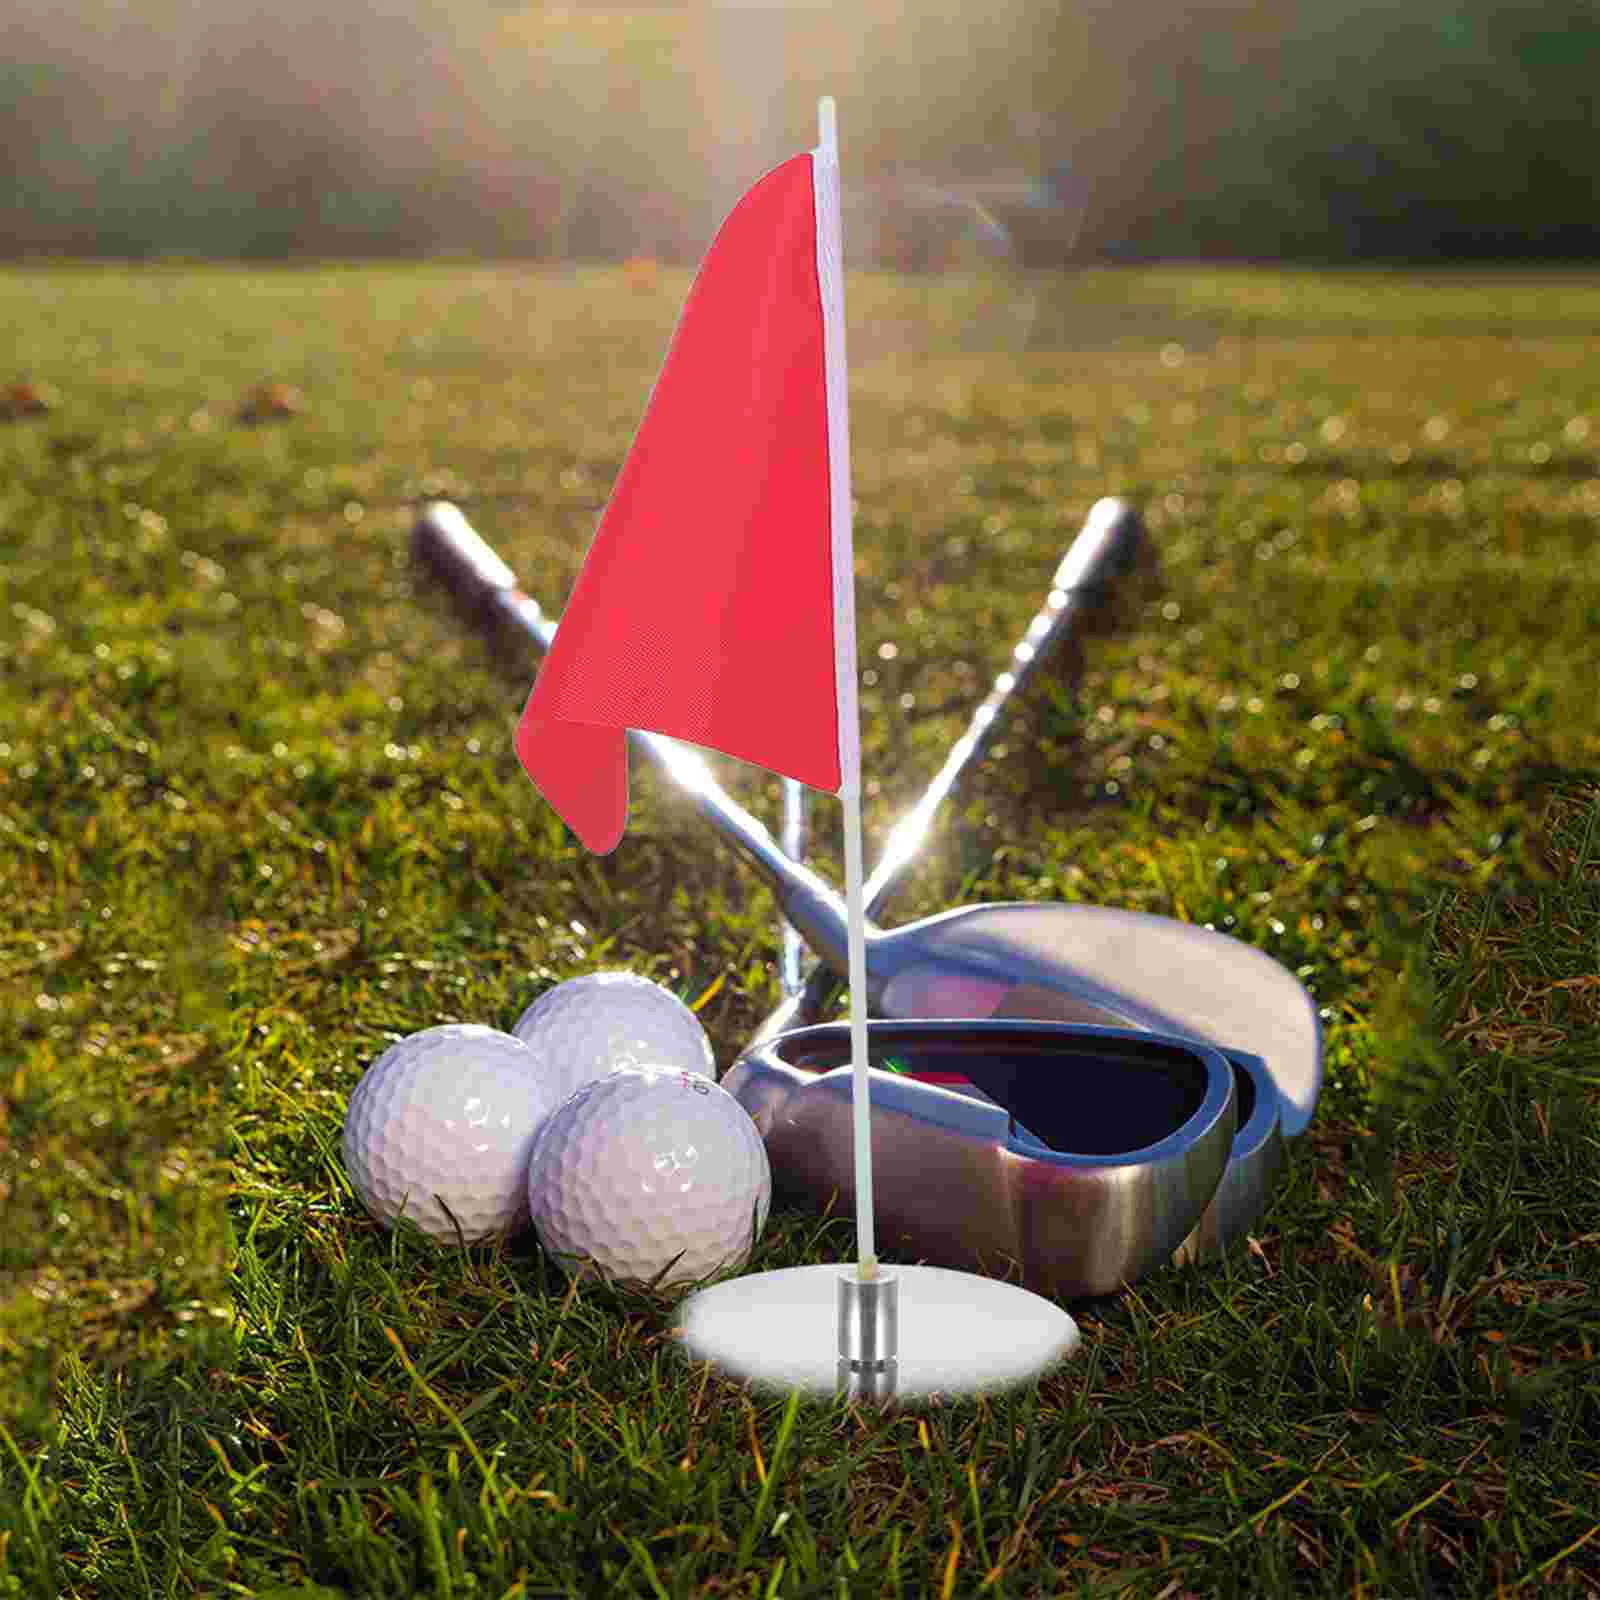 

Golf Golf Ballspole Practice Golfing Golf Balls Training for Portable Cup Plate Putting Green Oxford Cloth Small Golfs Man